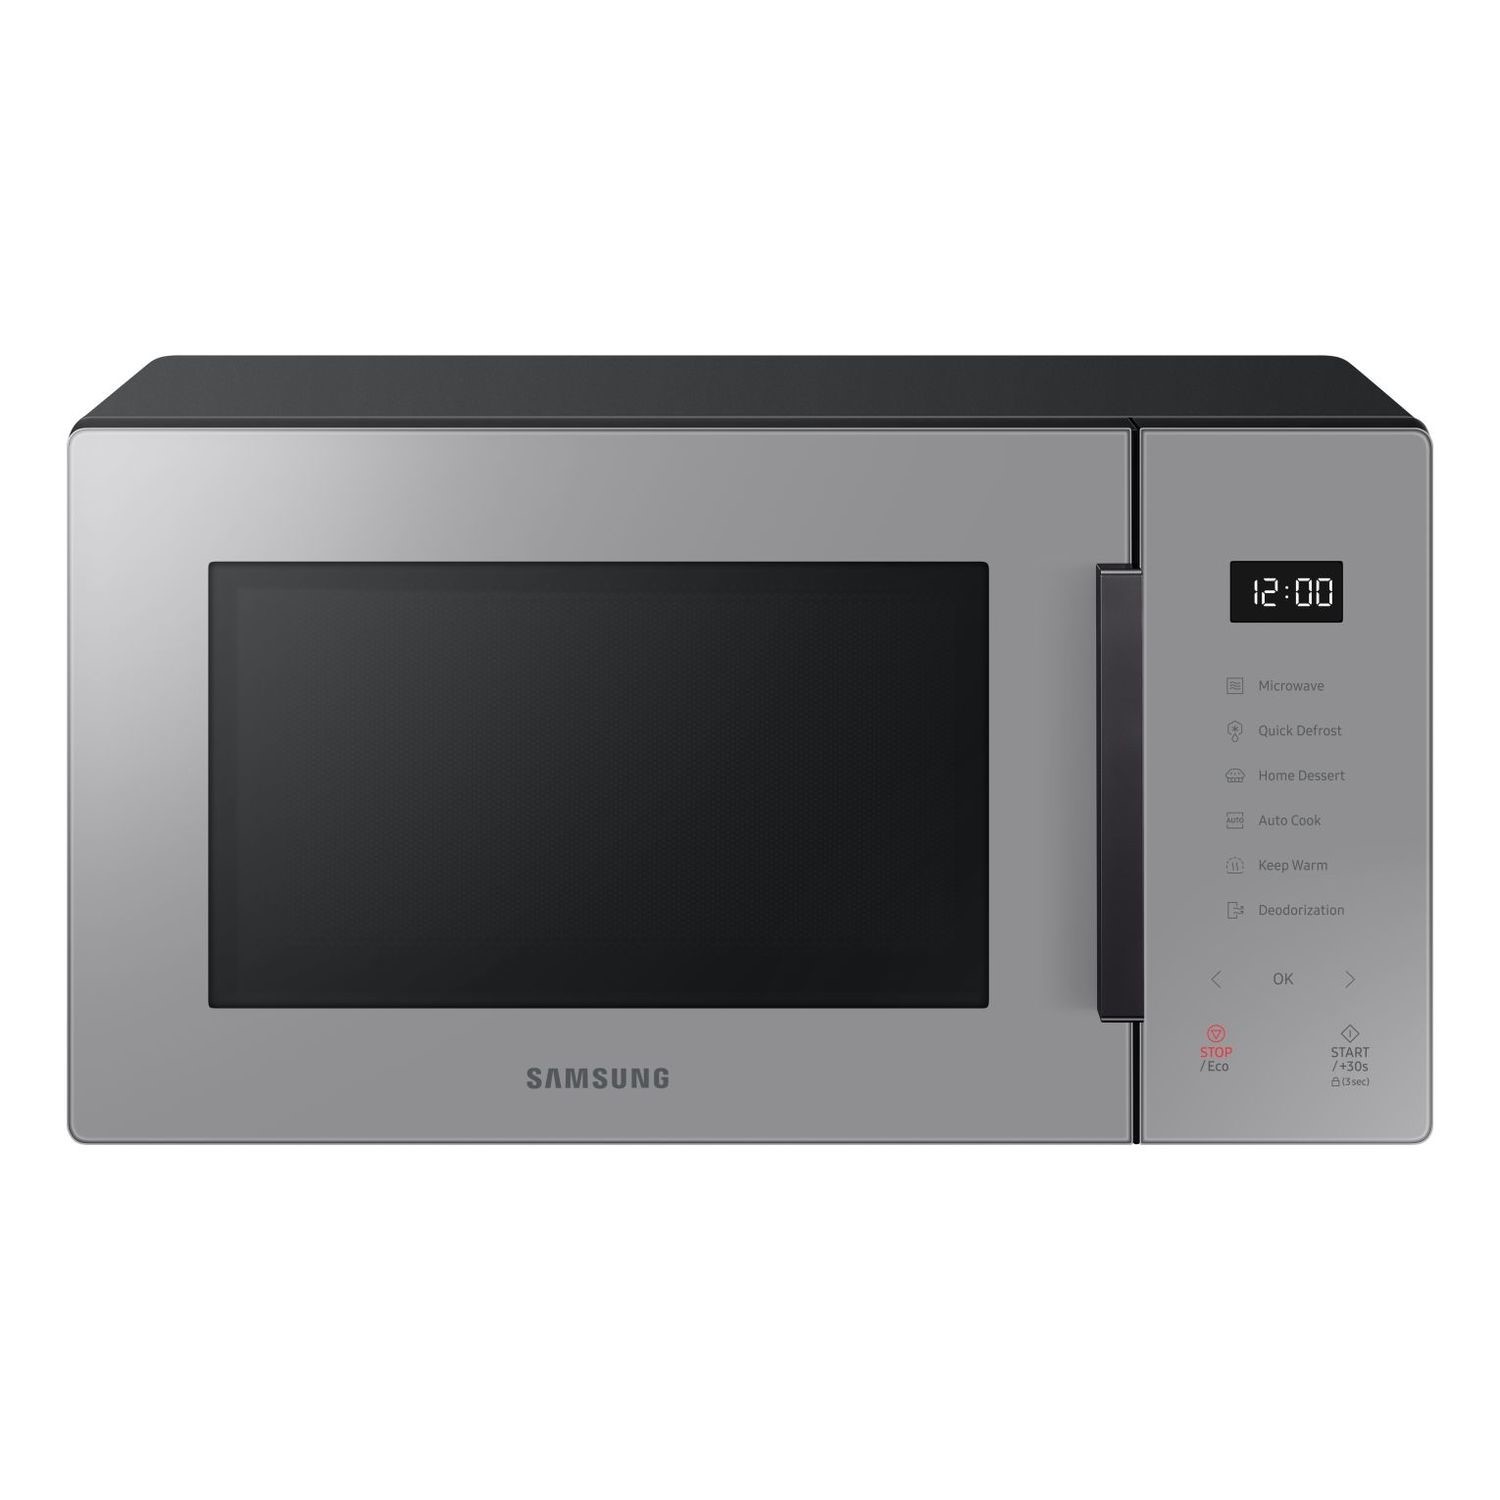 Refurbished Samsung MS23T5018AG 23L 800W Digital Microwave Oven Grey